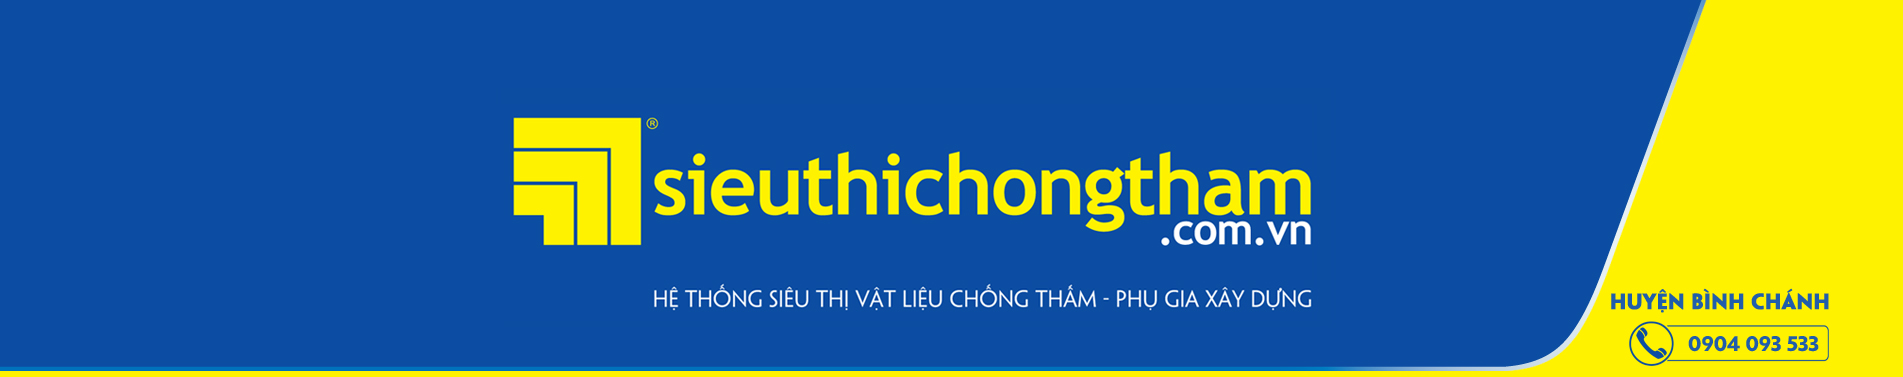 Huyen Binh Chanh Banner